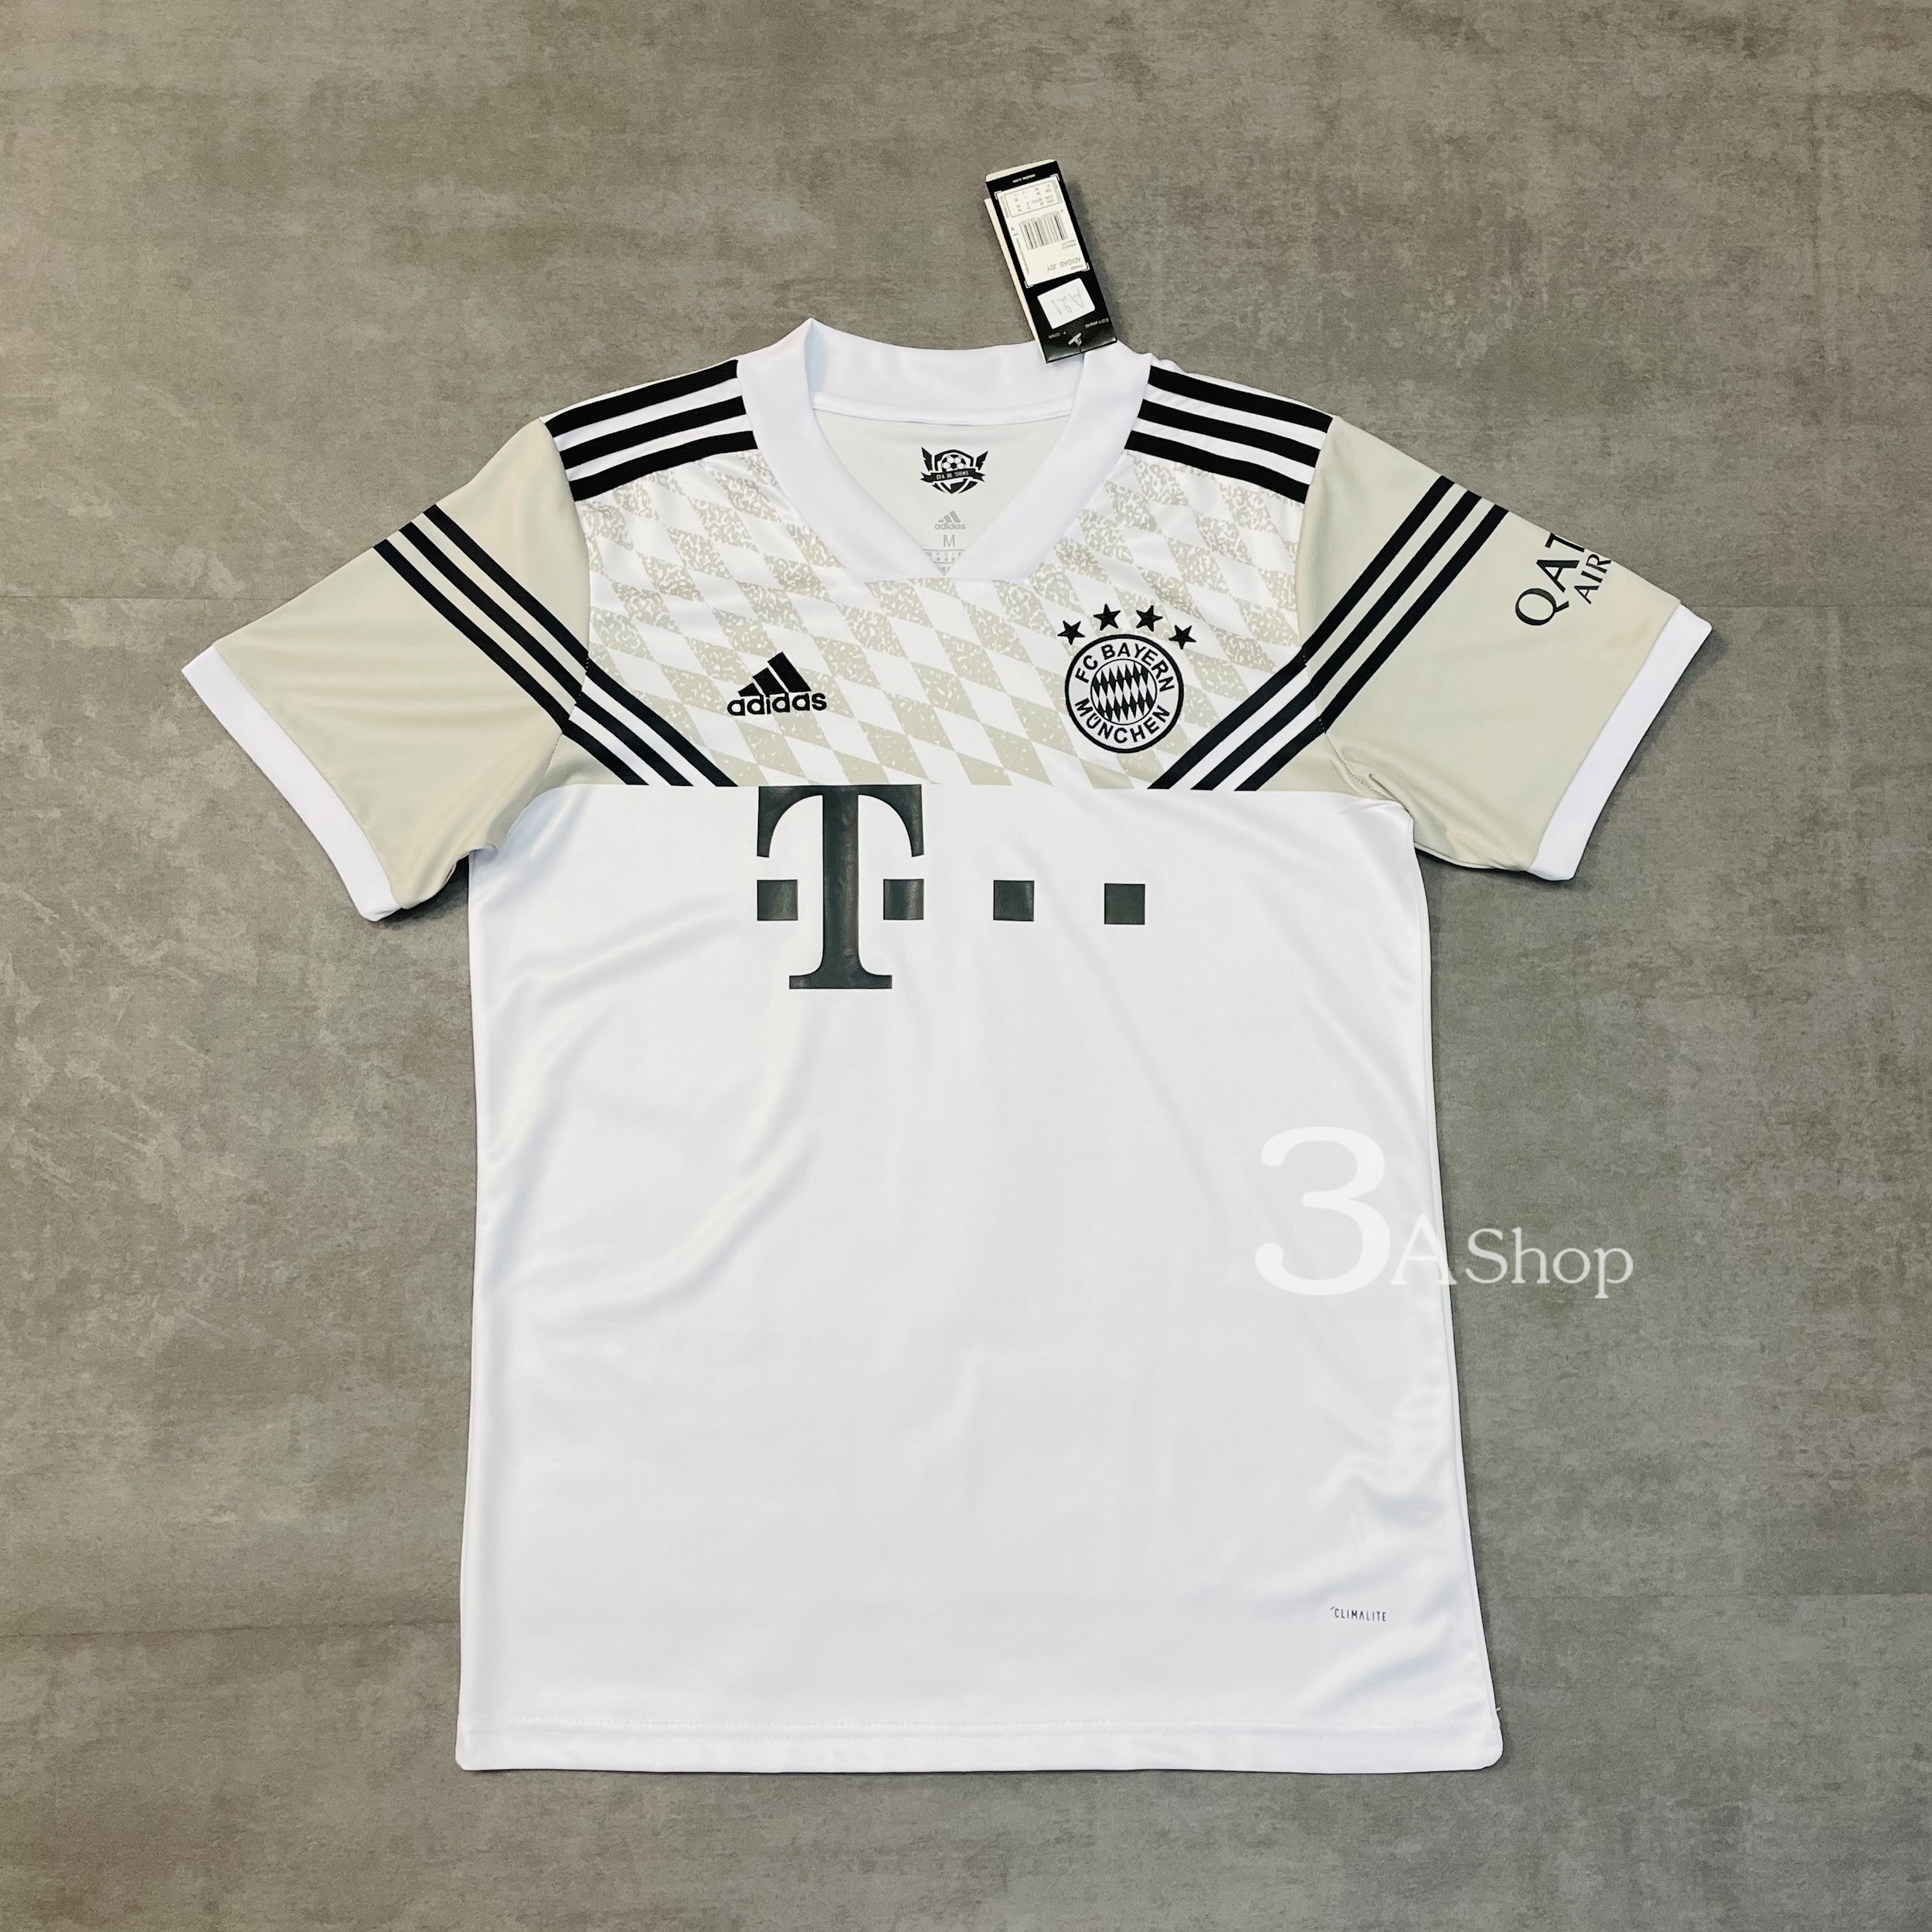 Bayern Training 2020/2021 White FOOTBALL SHIRT SOCCER JERSEY เสื้อบอล เสื้อฟุตบอล บาเยิร์น เสื้อฝึกซ้อม สีขาว งานคุณภาพ ผ้านุ่ม ใส่สบาย เกรด AAA